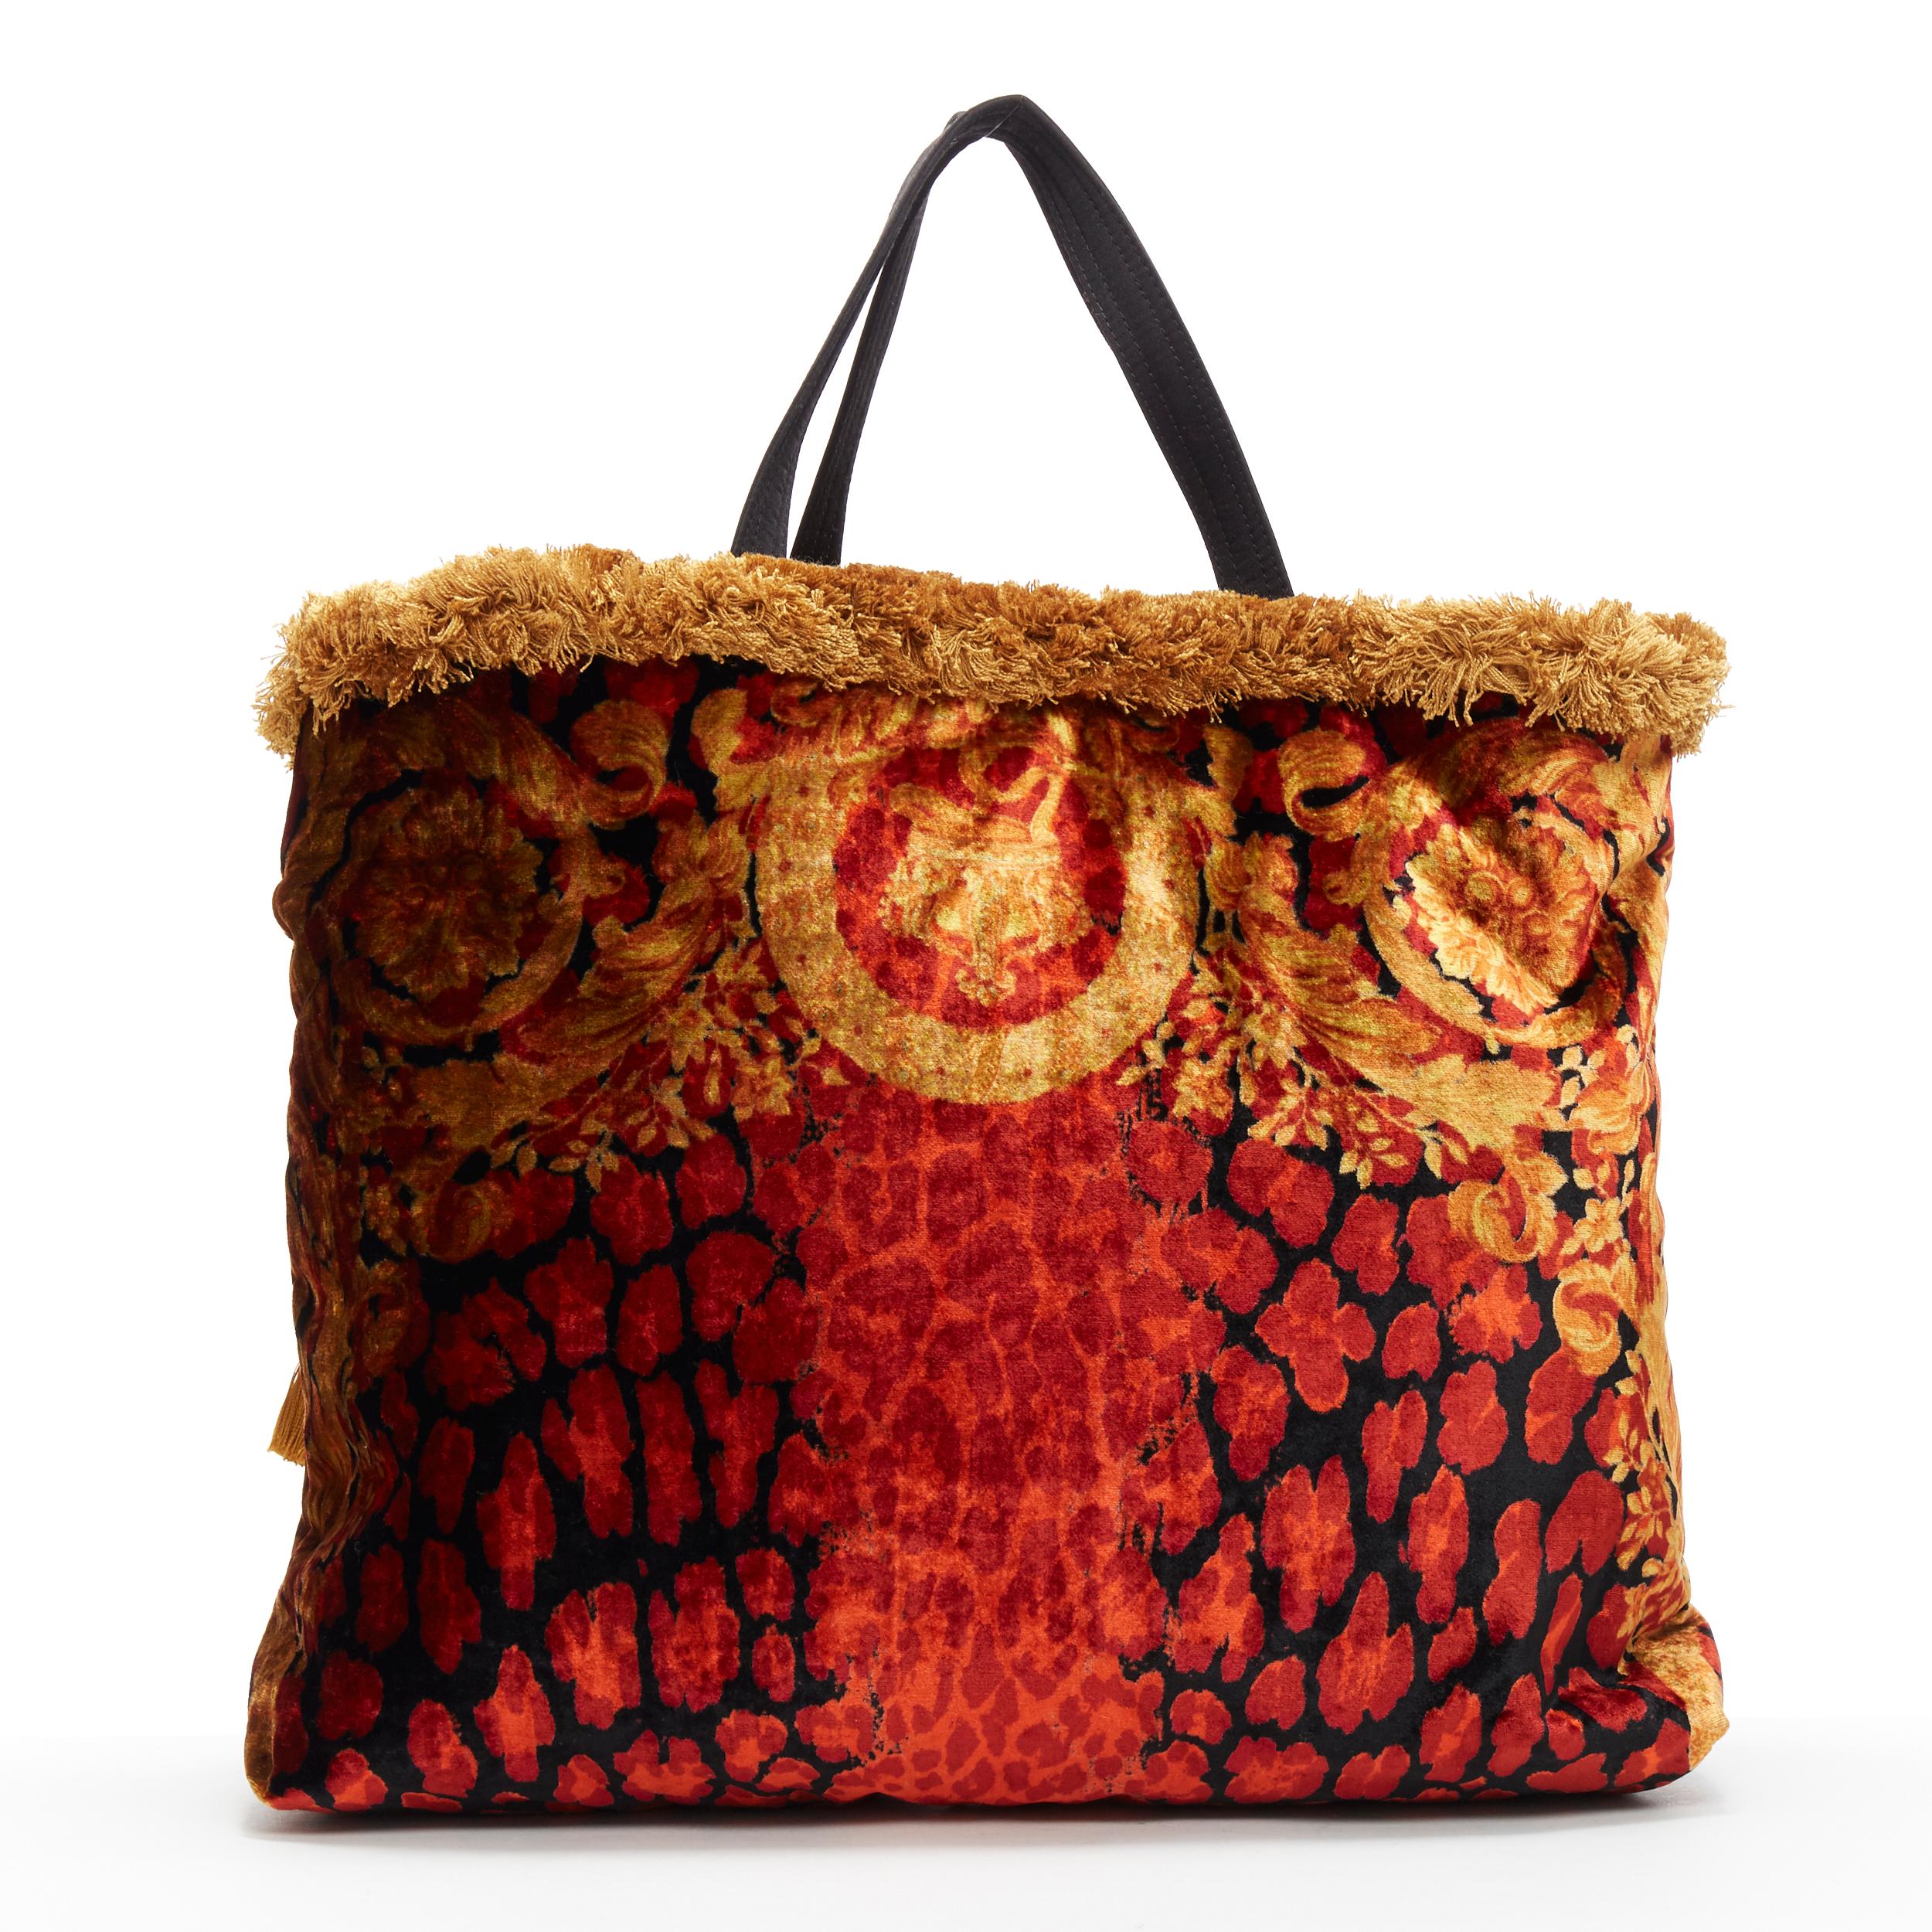 Black new VERSACE AW18 Pillow Talk red leopard velvet fringe trimmed large tote bag